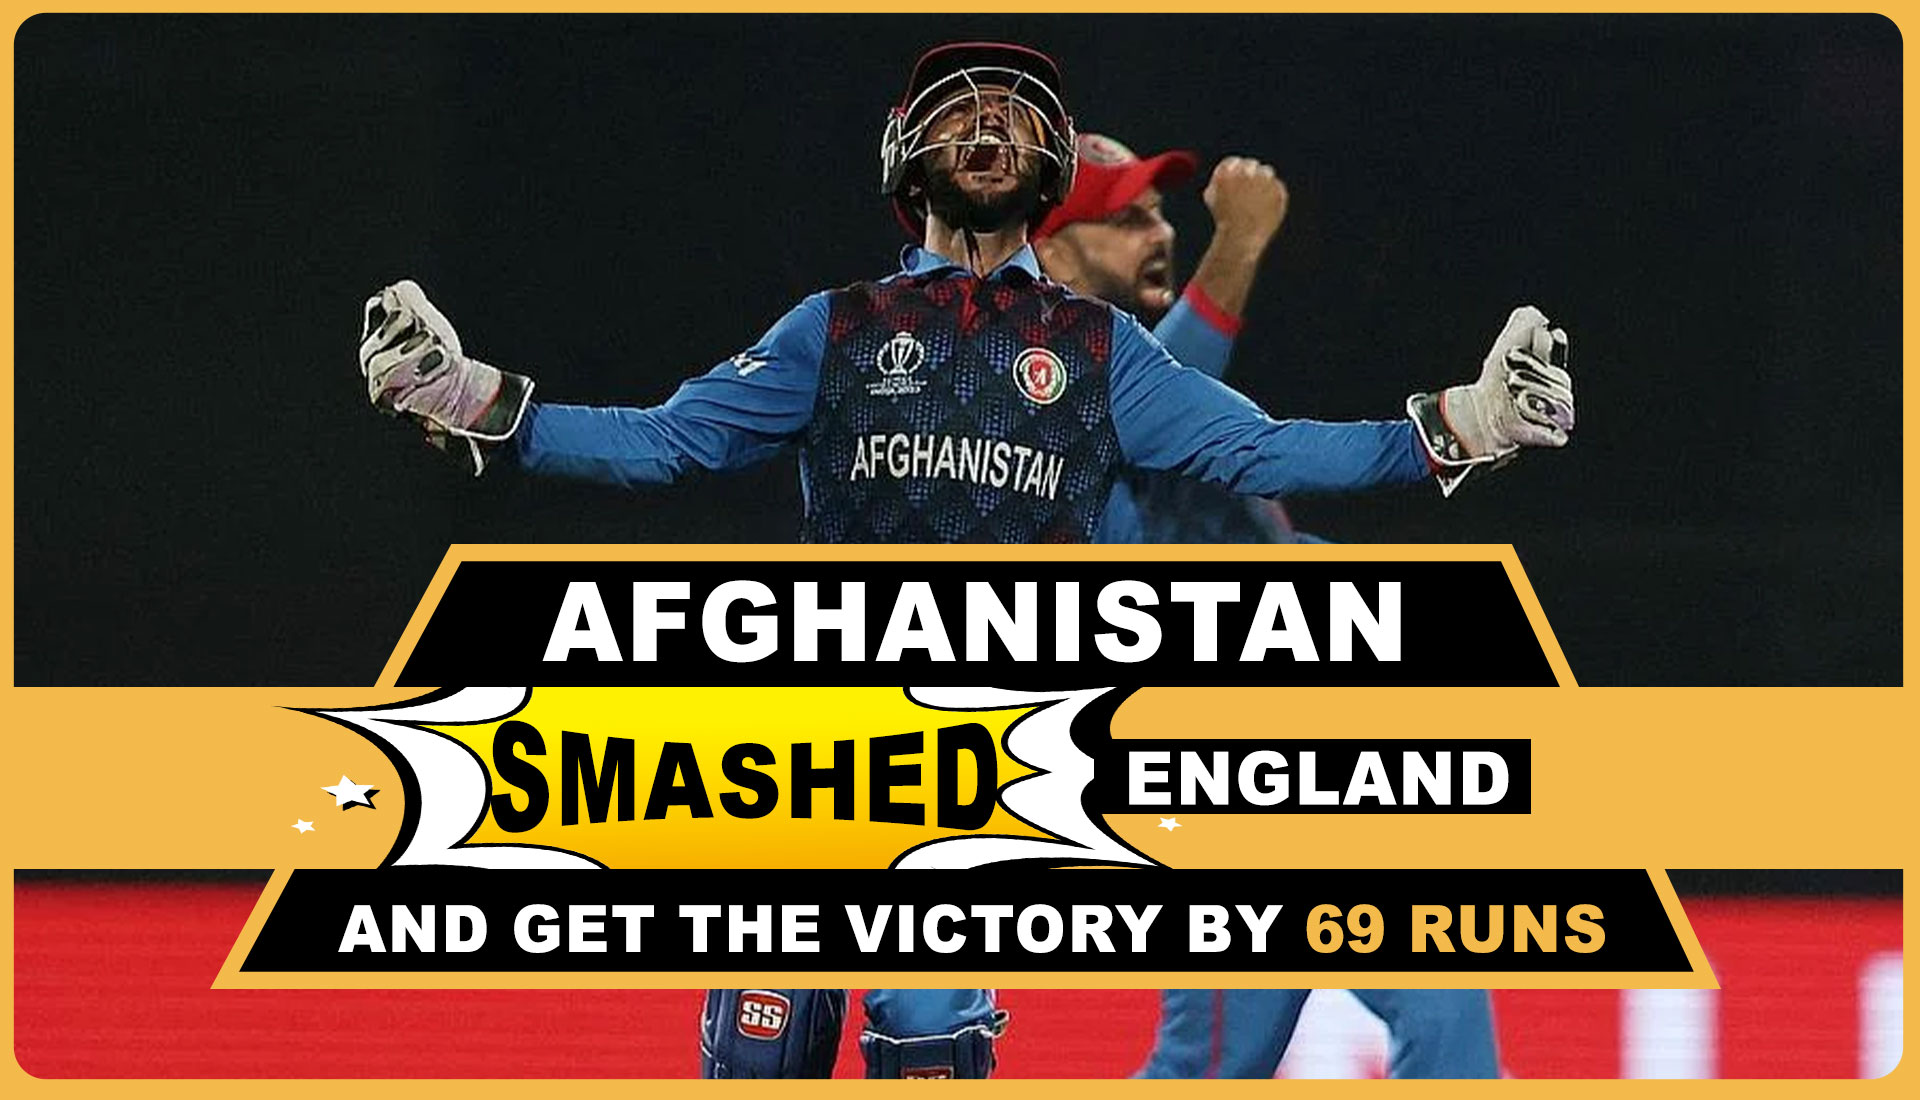 Afghanistan Smashed England